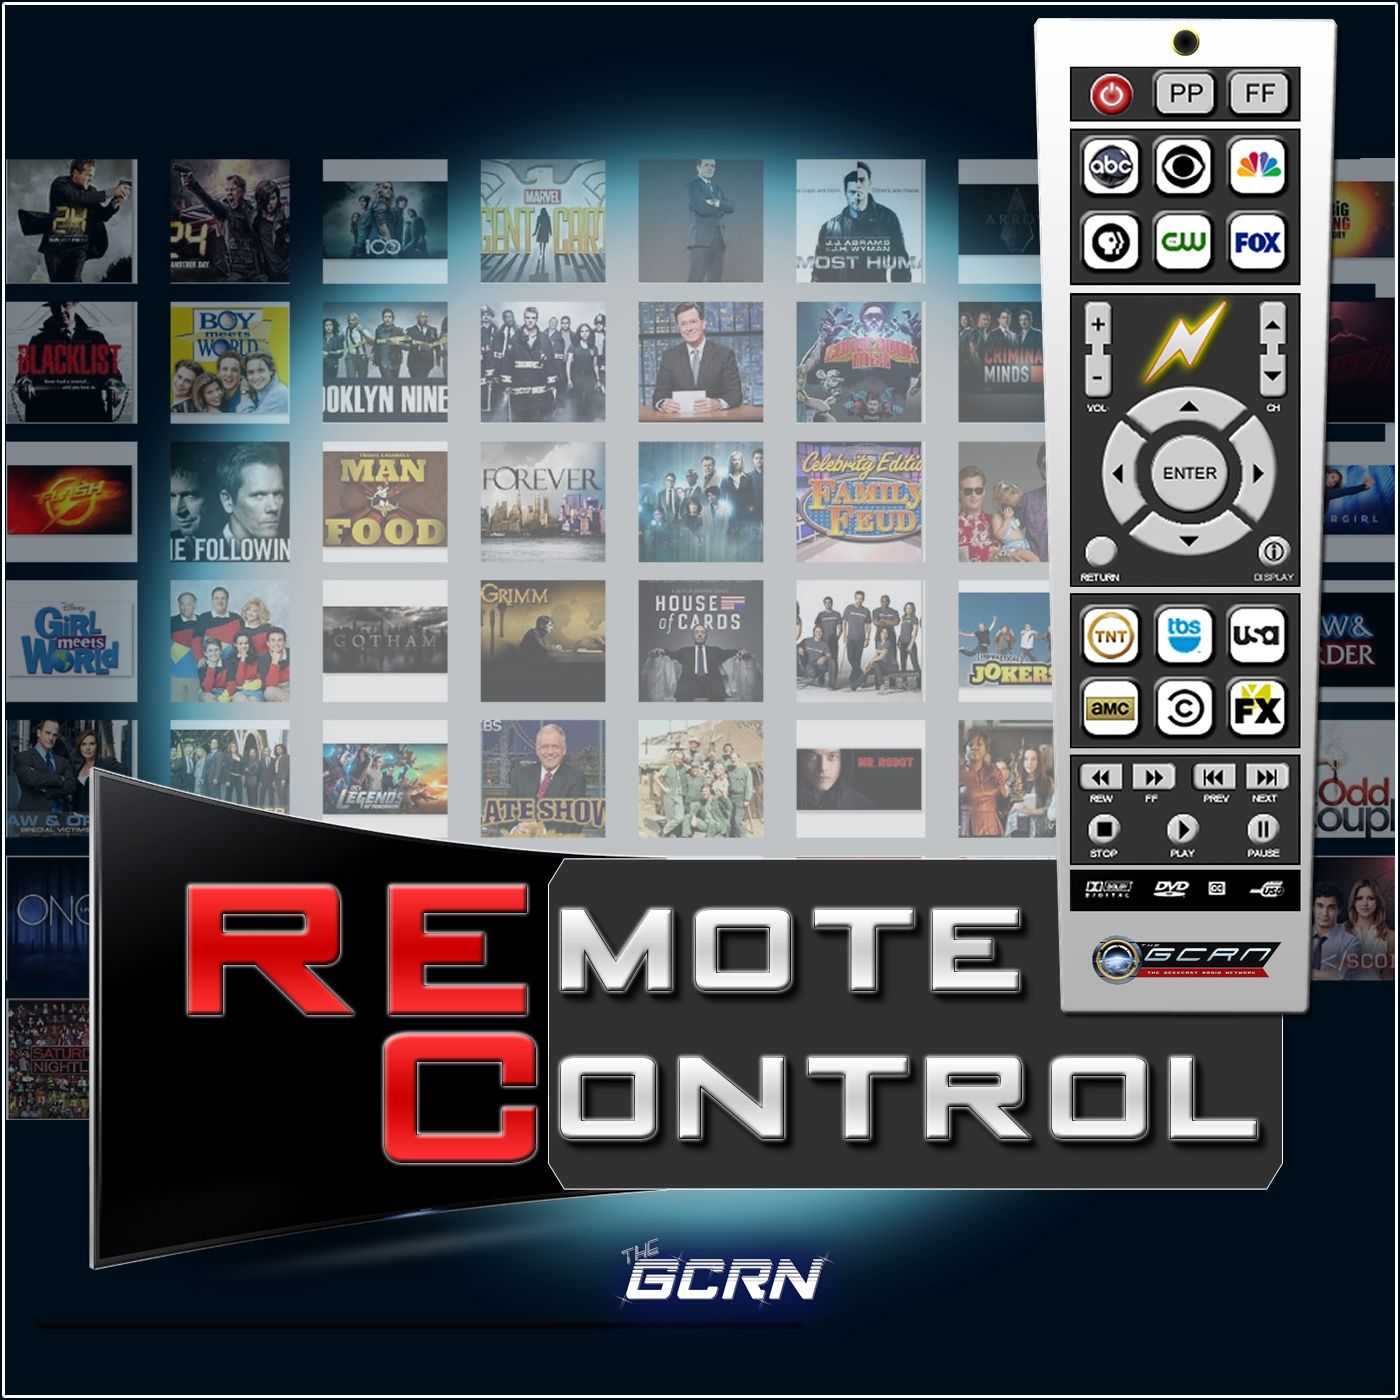 Remote Control - Take 5 - FOX - APB